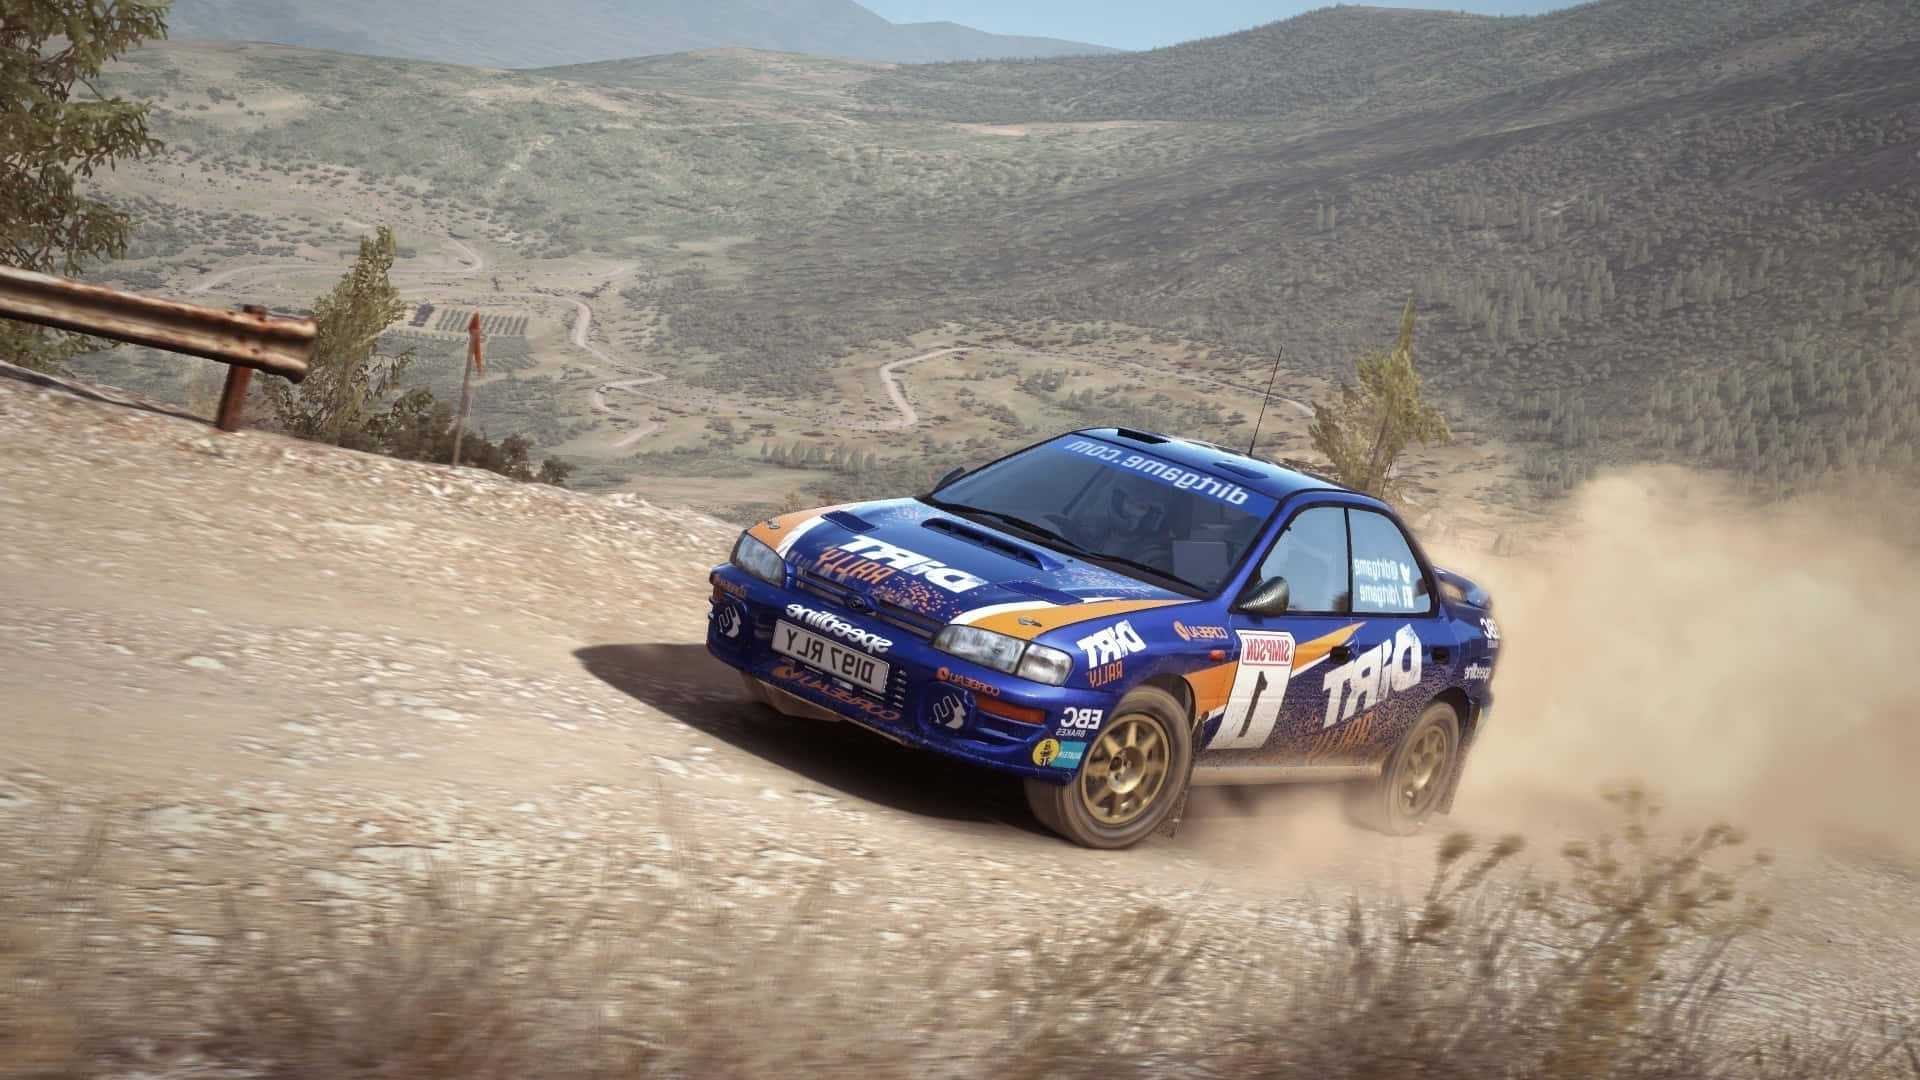 An action shot of an adventure-packed Dirt Rally race